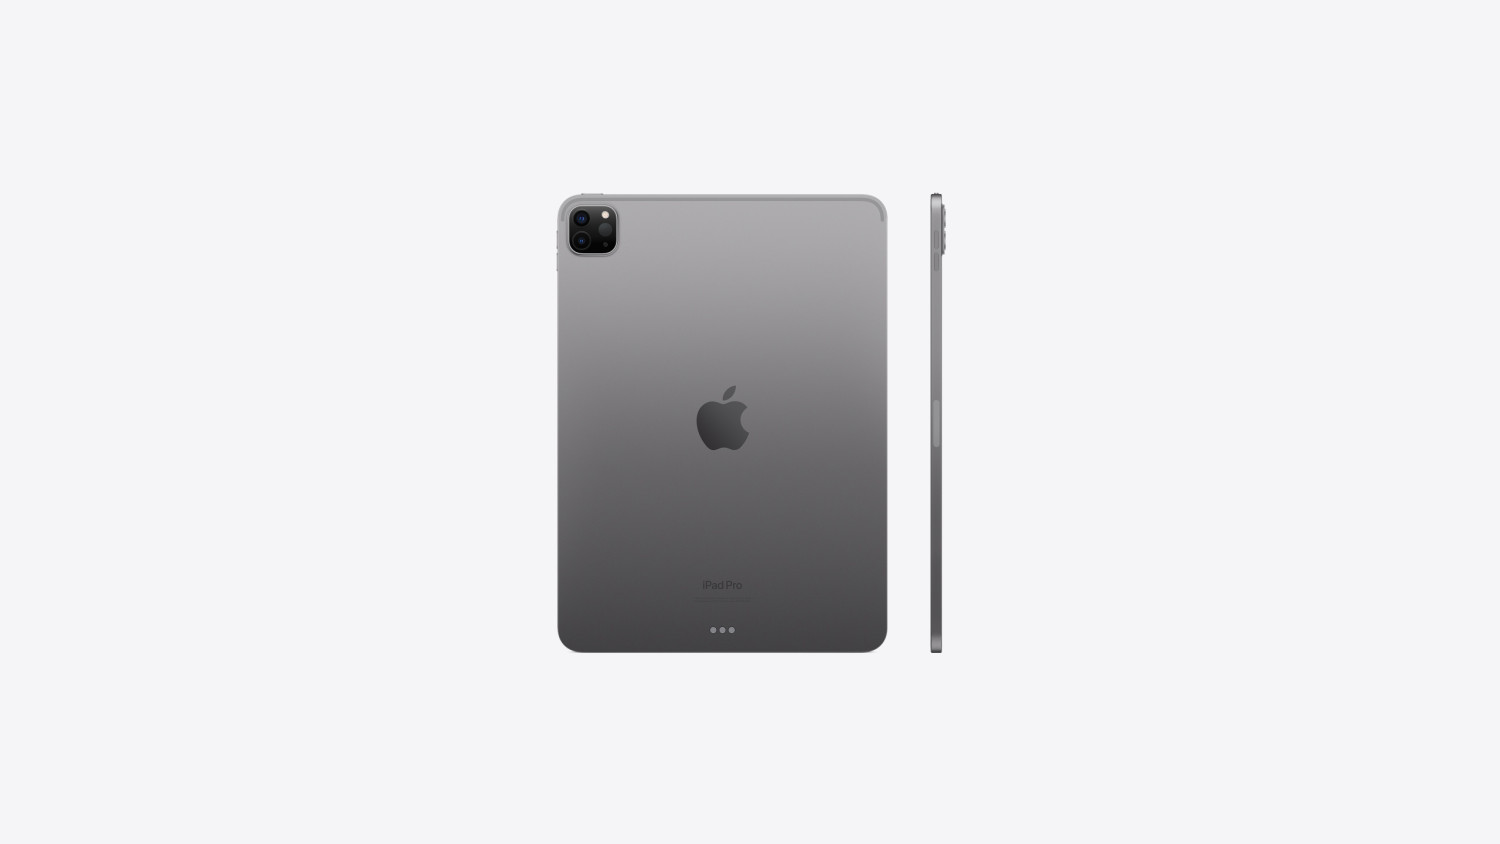 Apple 11" iPad Pro M1 Chip - 128GB (Mid 2021)